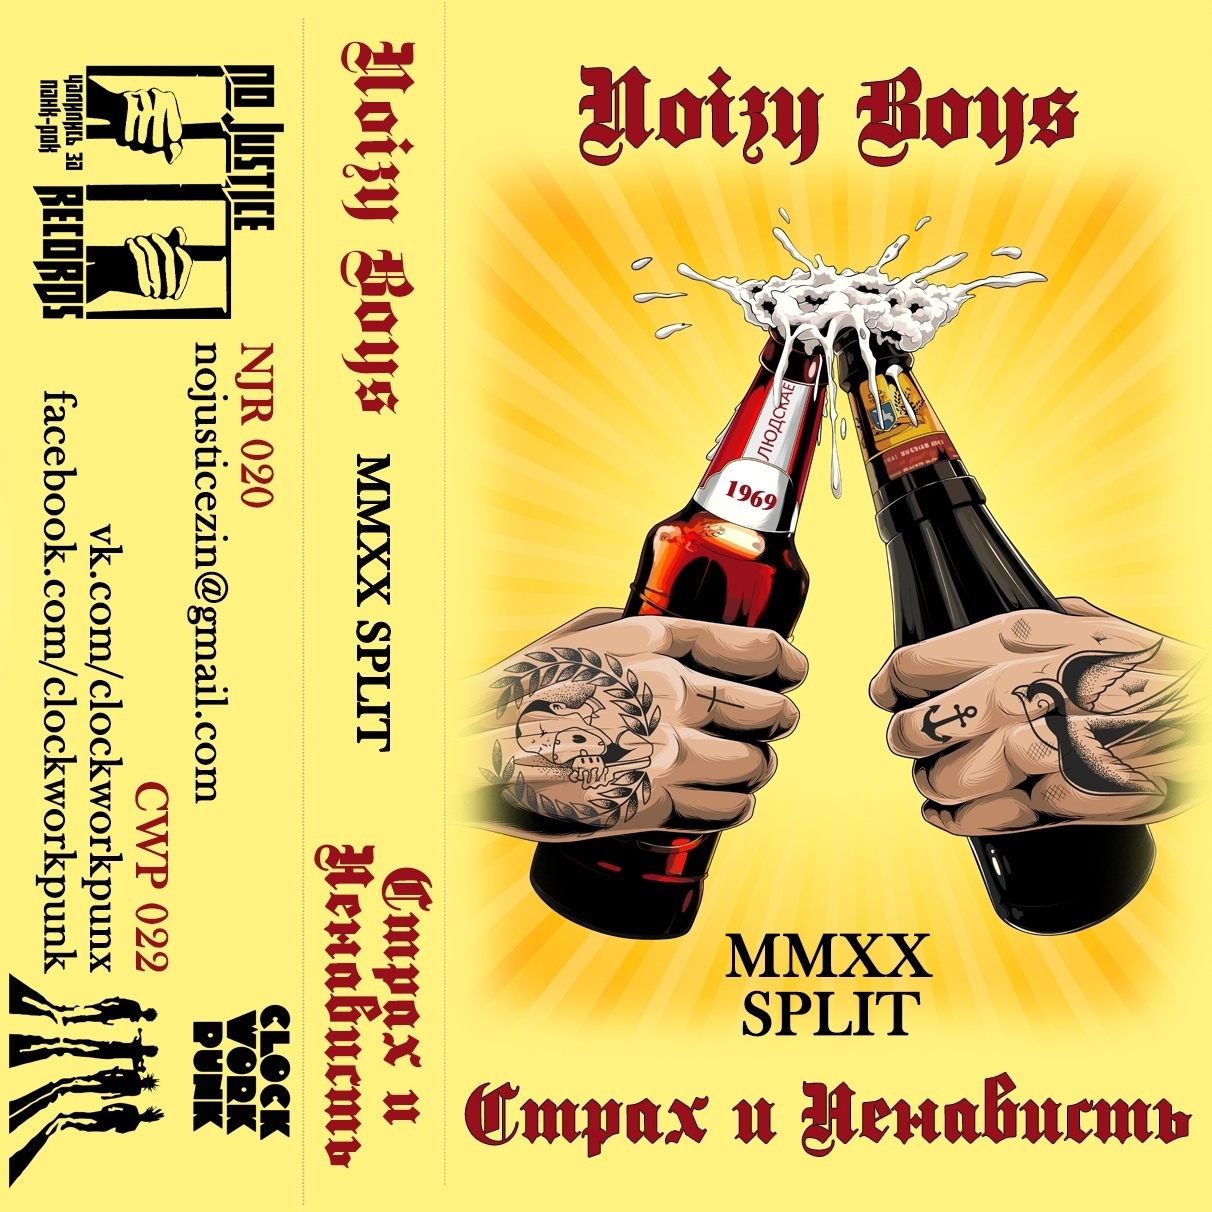 Split - СТРАХ И НЕНАВИСТЬ/ Noizy Boys MMXX (Tape)